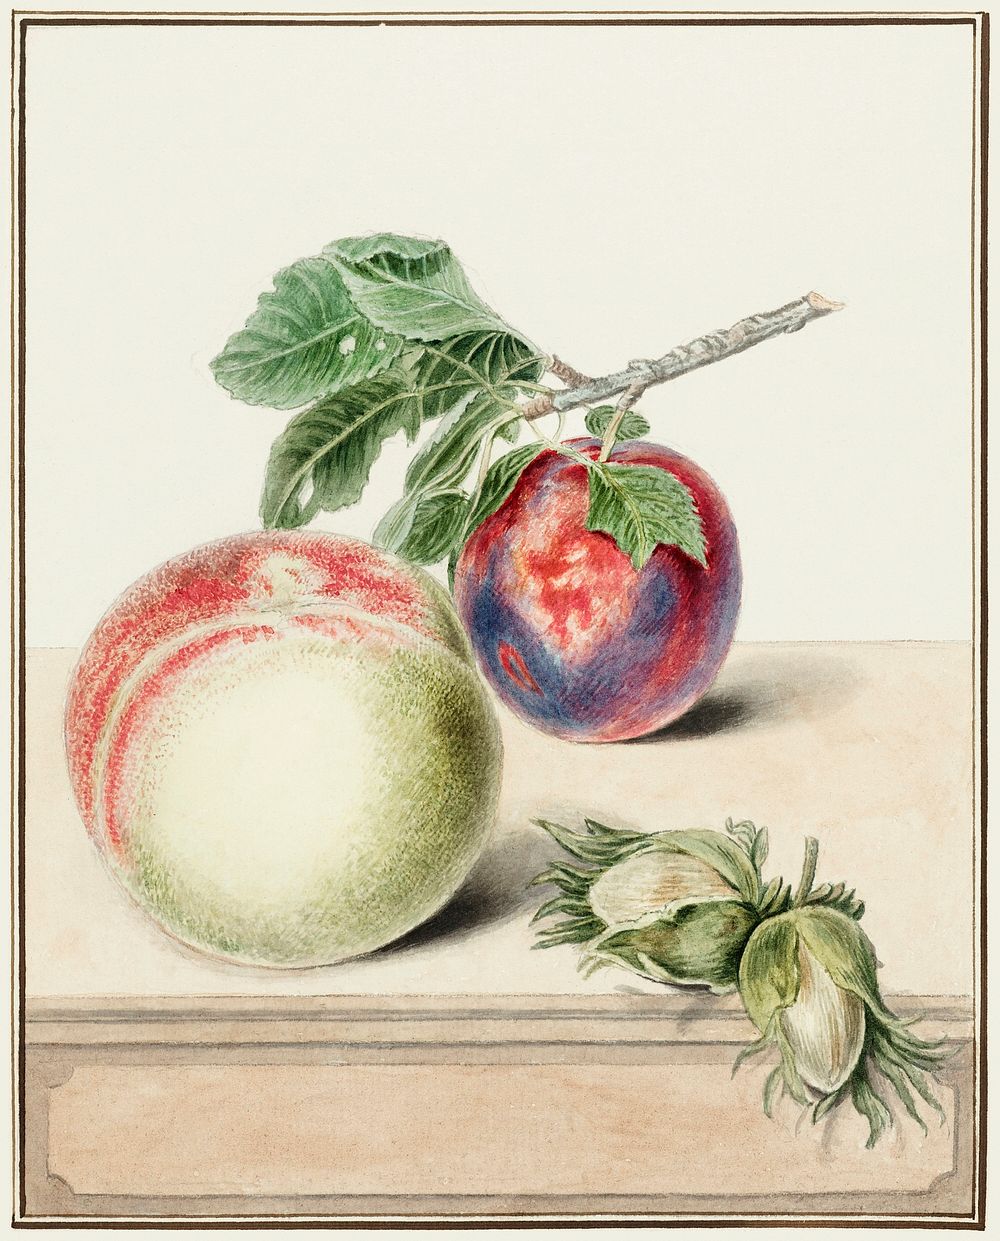 Peach and plum by Elisabeth Geertruida van de Kasteele, after Michiel van Huysum (1714-1810). Original from The Rijksmuseum.…